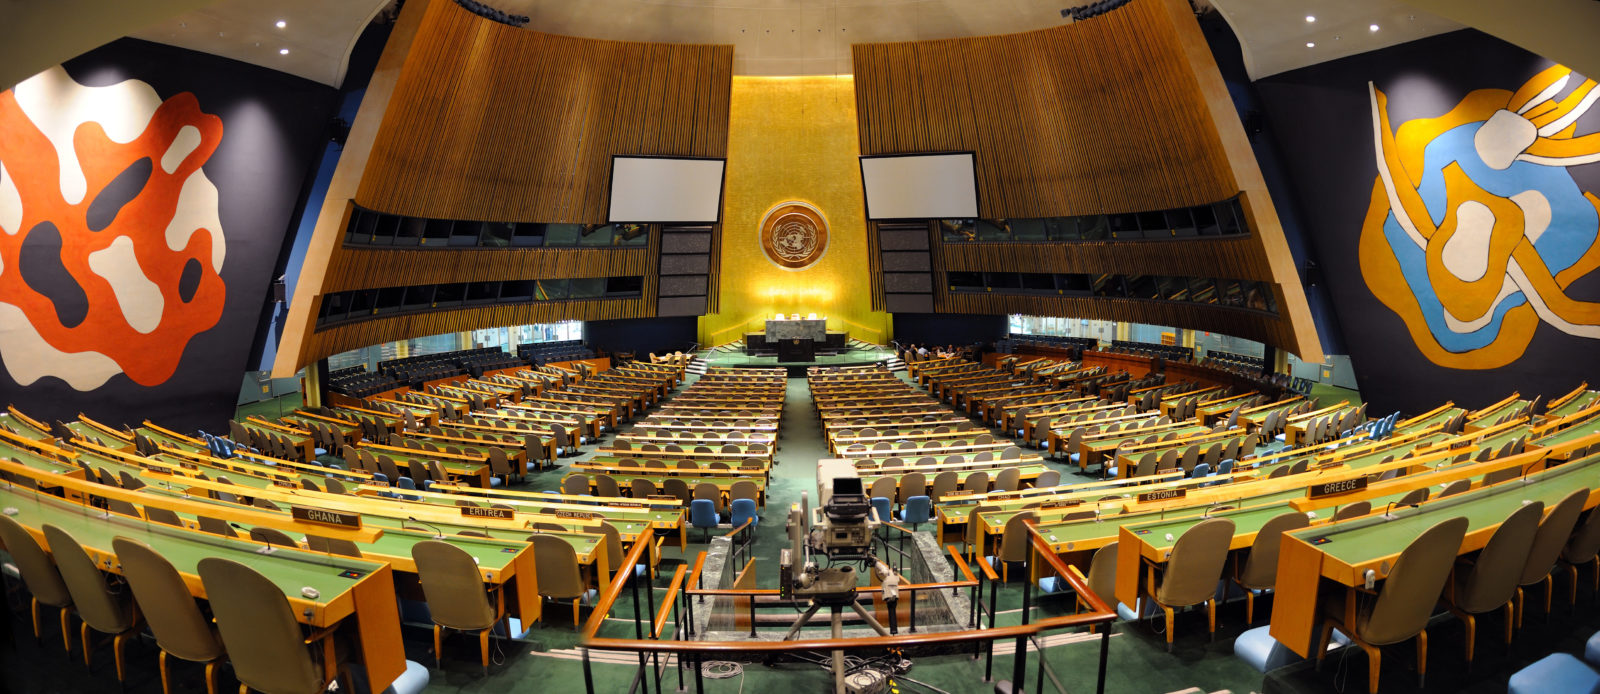 U.N. Assembly room - Songquan Deng / Shutterstock.com